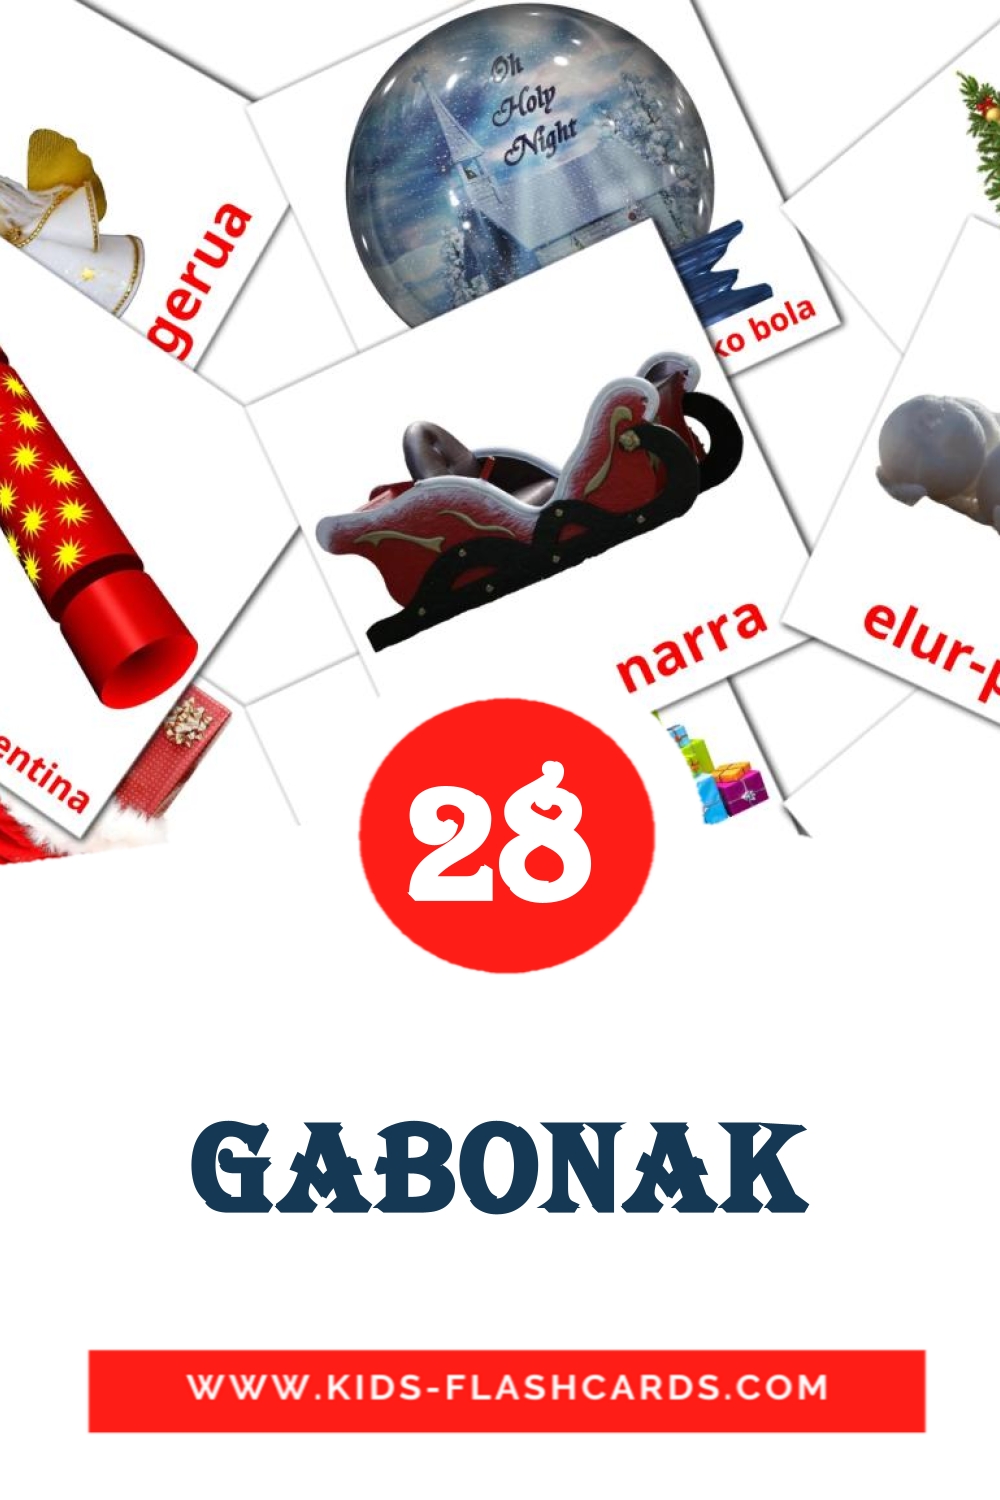 28 carte illustrate di Gabonak per la scuola materna in basco